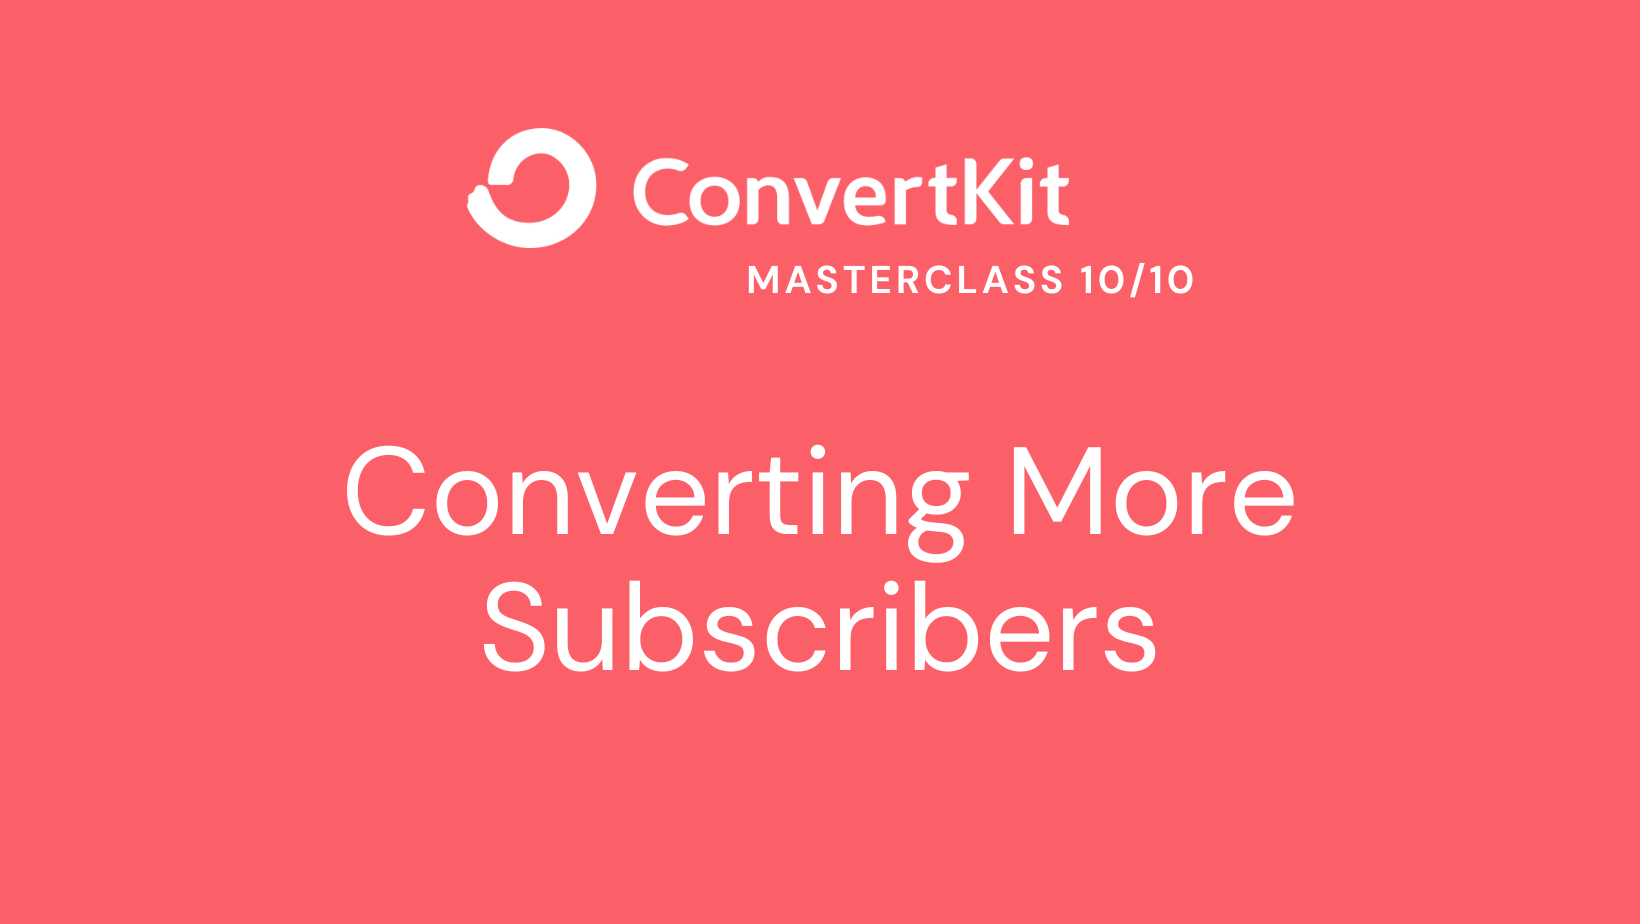 ConvertKit Masterclass 10/10 Converting More Subscribers